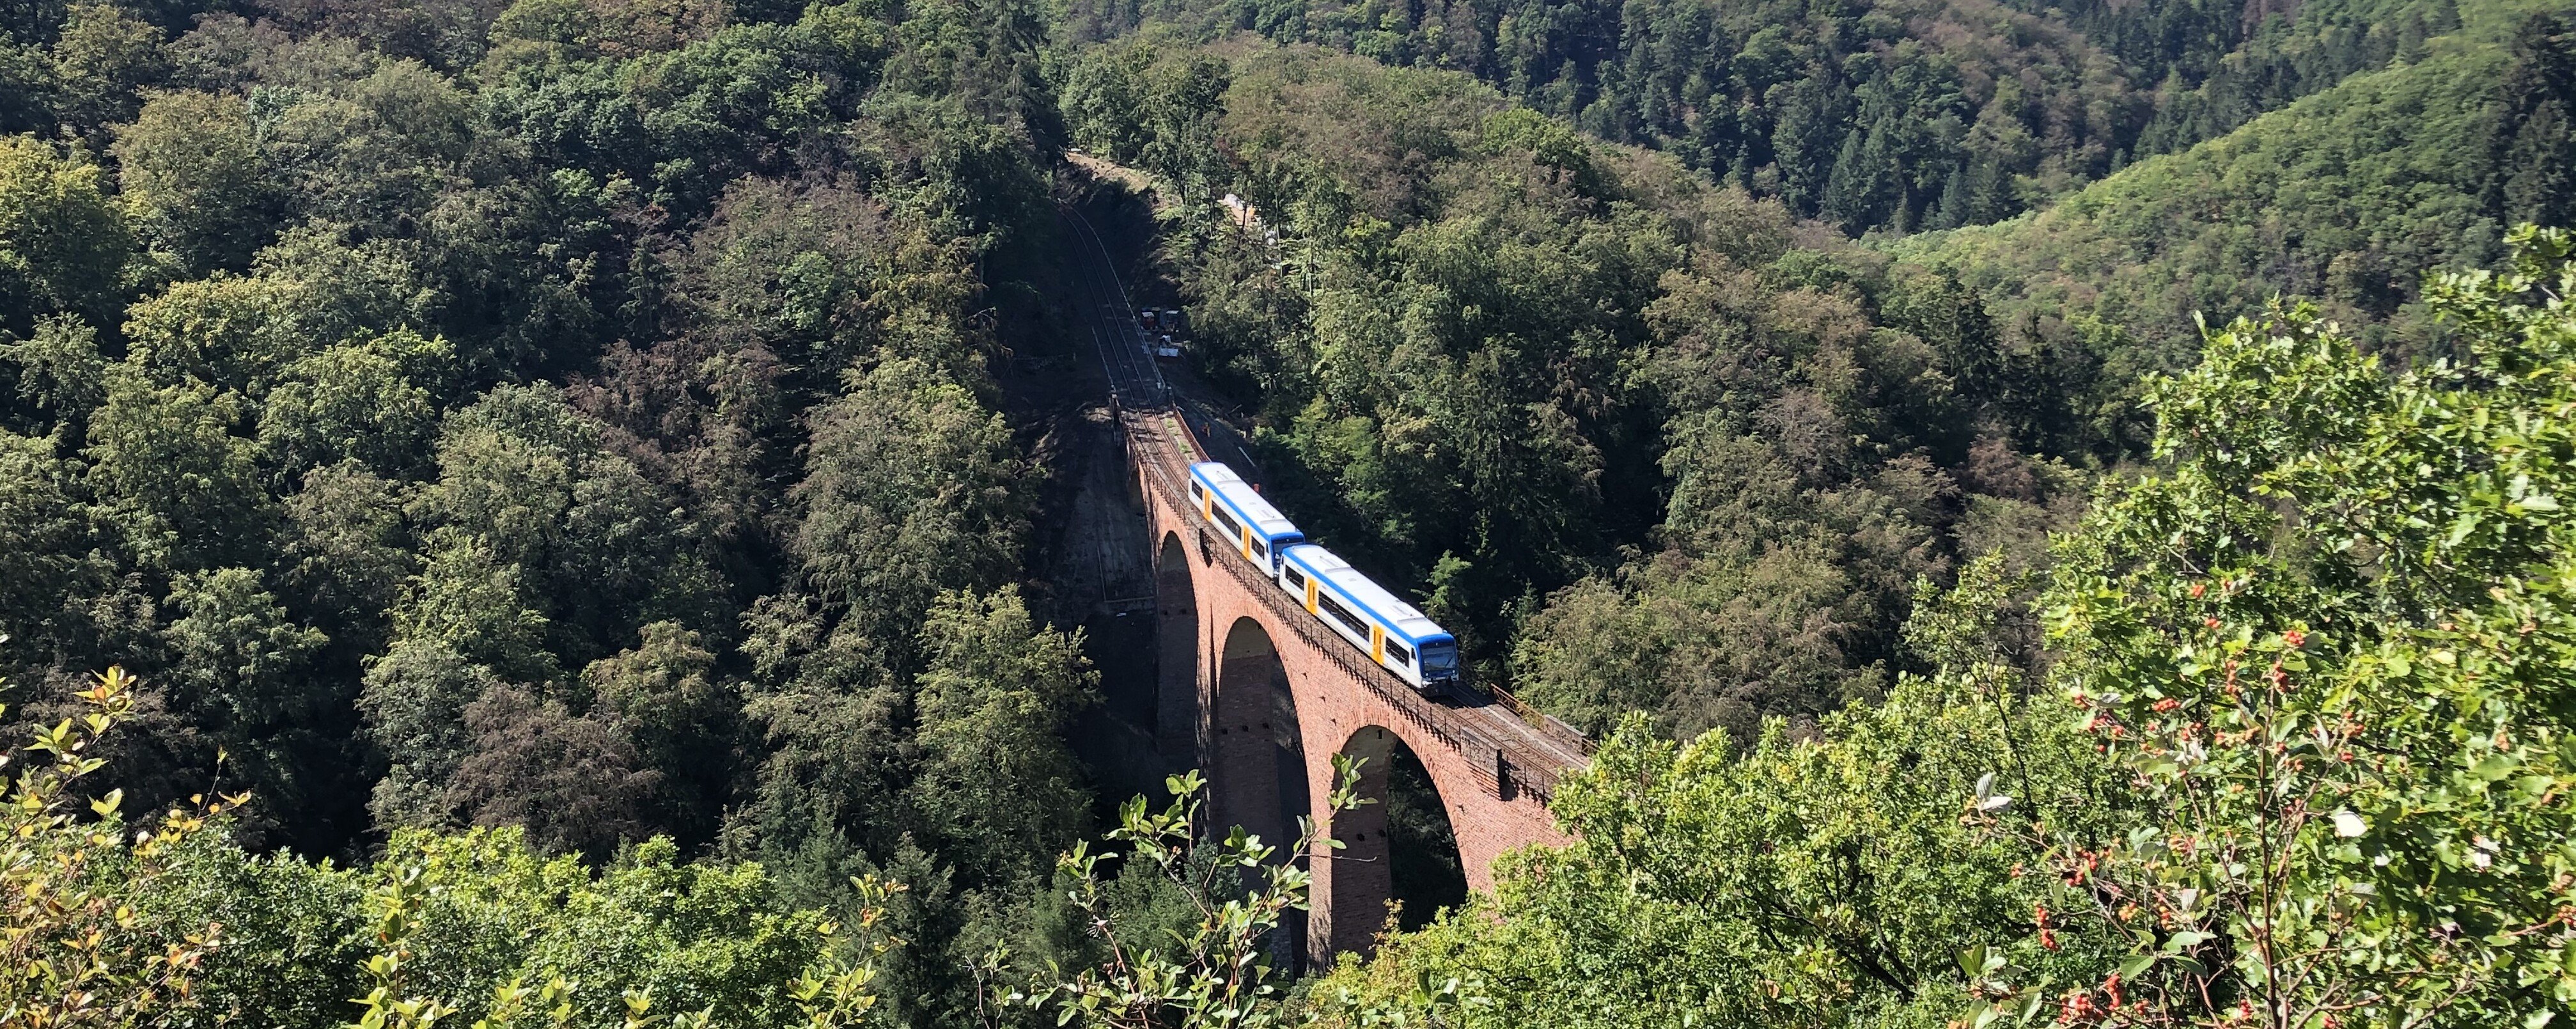 Viadukt Hunsrückbahn, Emmelshausen, Liesenfelder Hütte, BENDER FINANZKONZEPTE, JANNIK BENDER